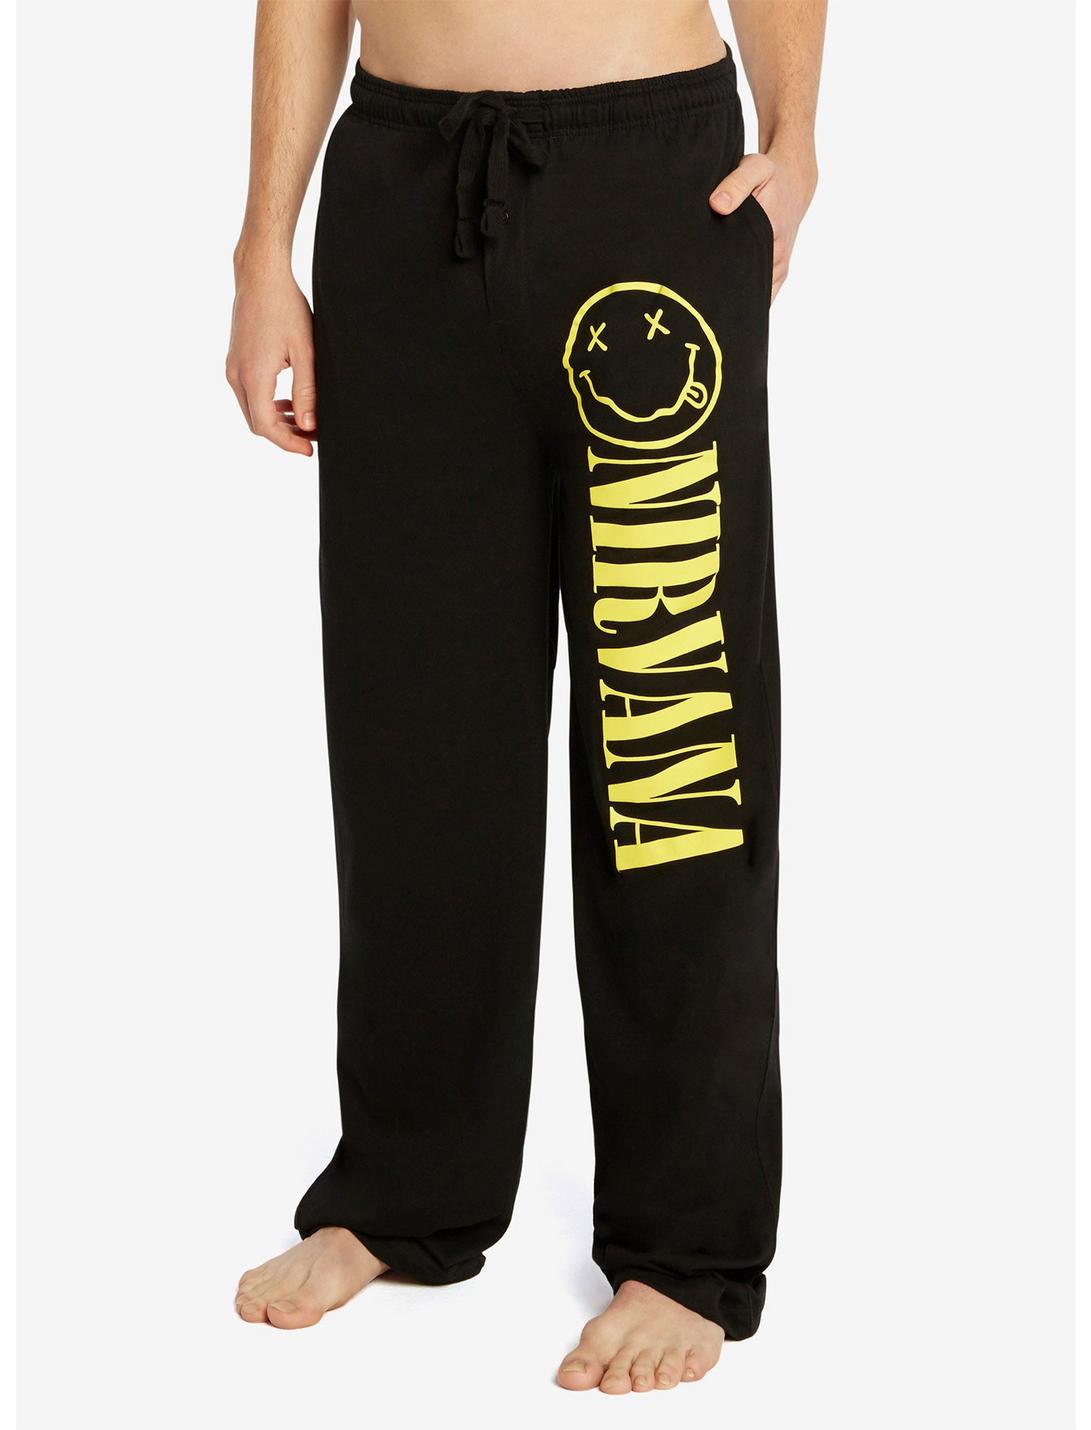 Nirvana Smiley Logo Guys Pajama Pants, BLACK, hi-res